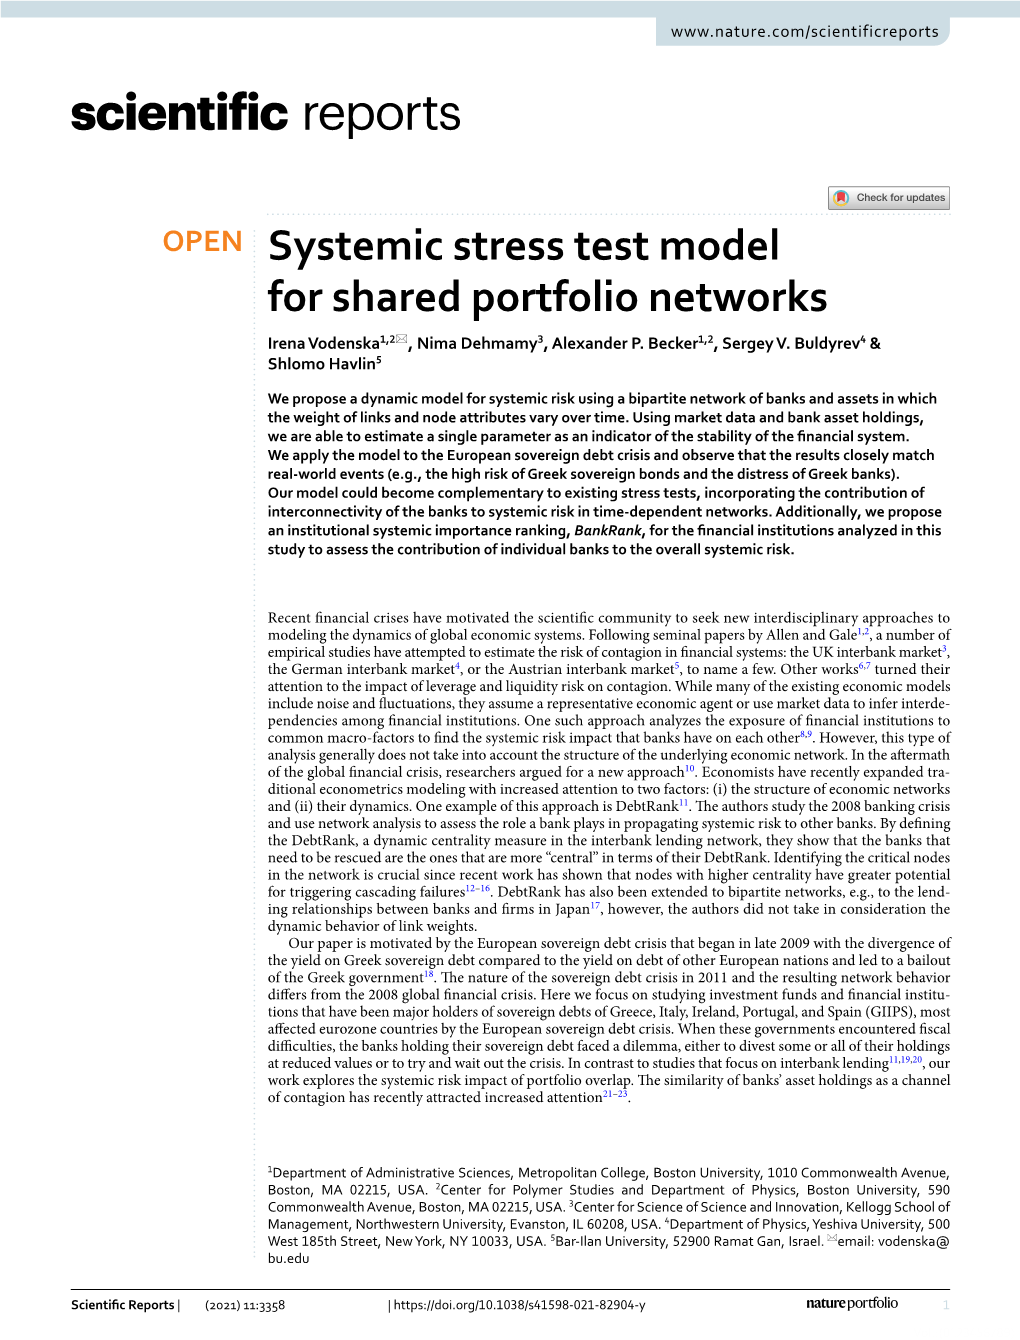 Systemic Stress Test Model for Shared Portfolio Networks Irena Vodenska1,2*, Nima Dehmamy3, Alexander P